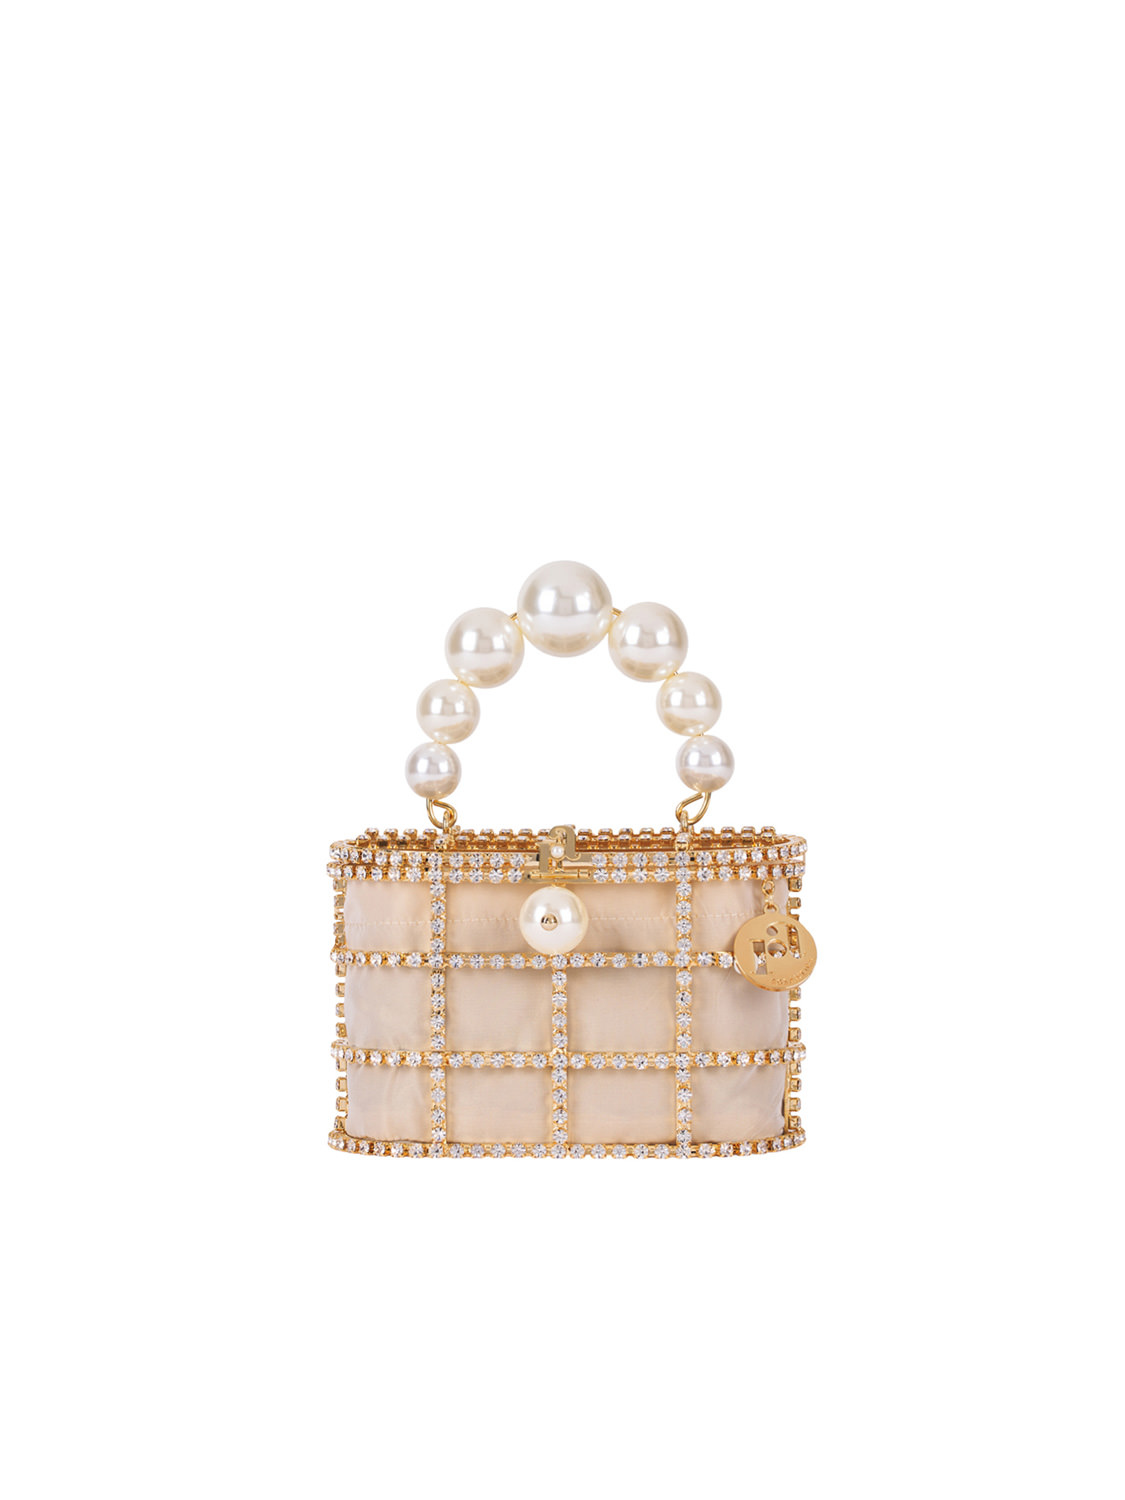 Chanel 2-Tone Crystal Bag - Limited Edition